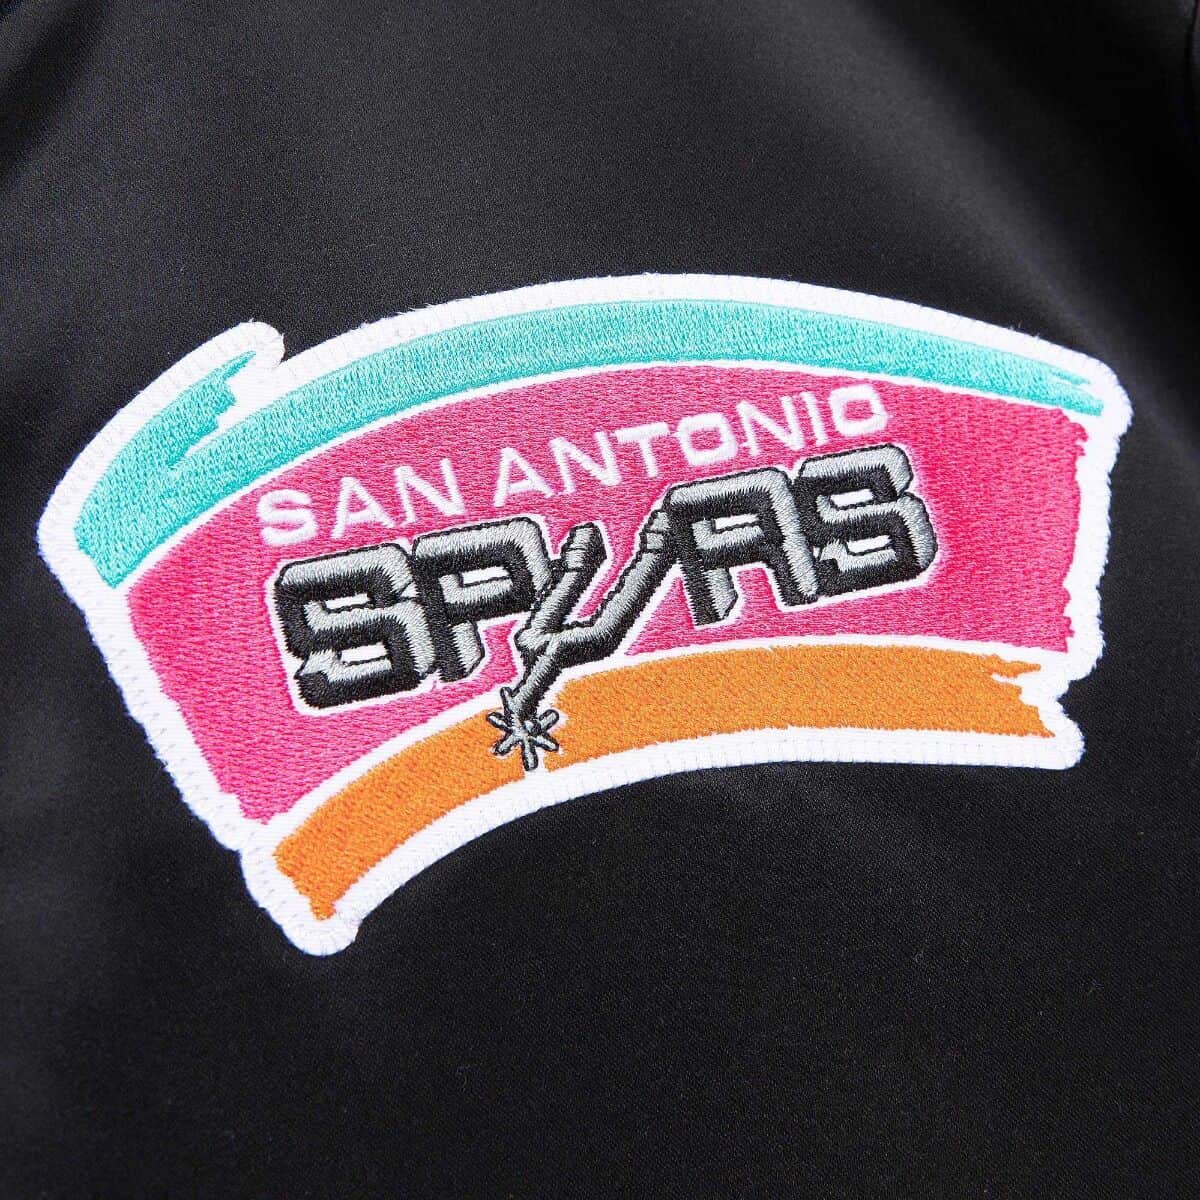 NBA San Antonio Spurs Satin Jacket